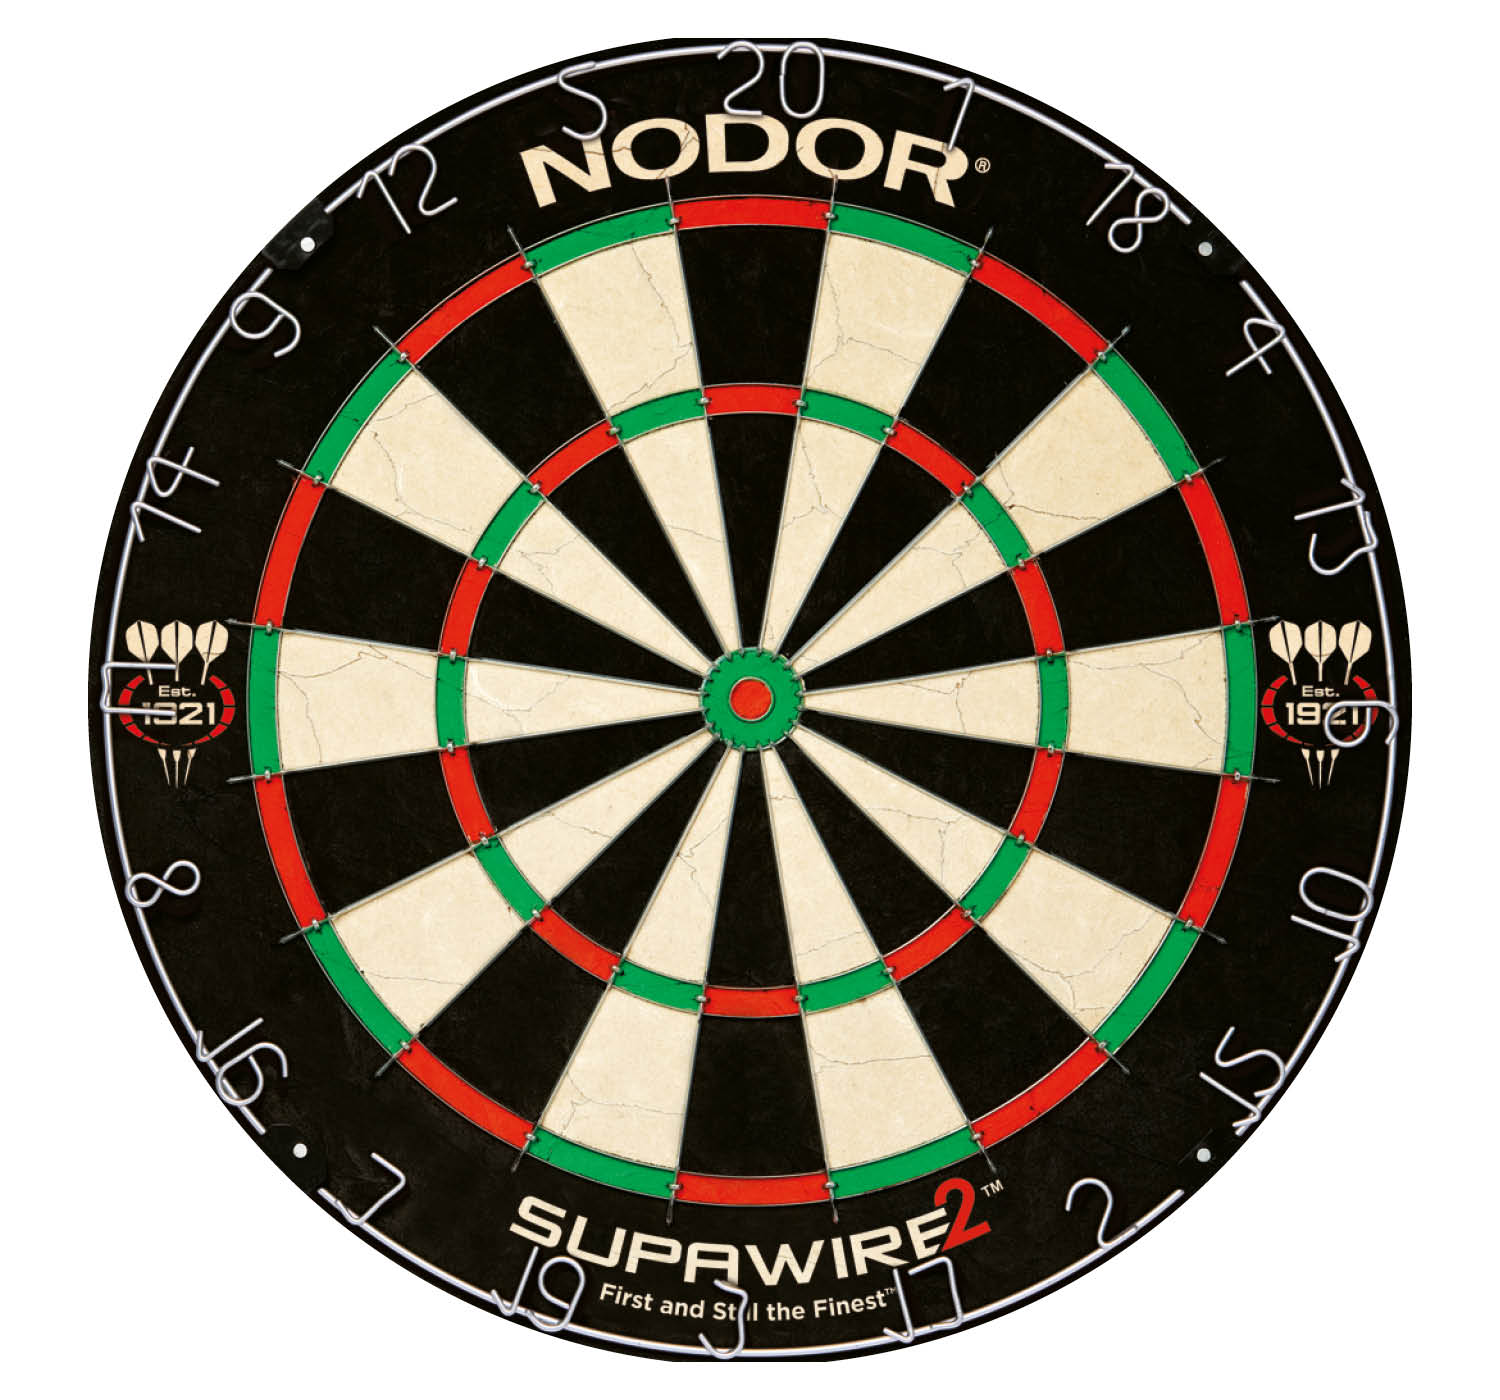 supawire2 dartboard - image 1